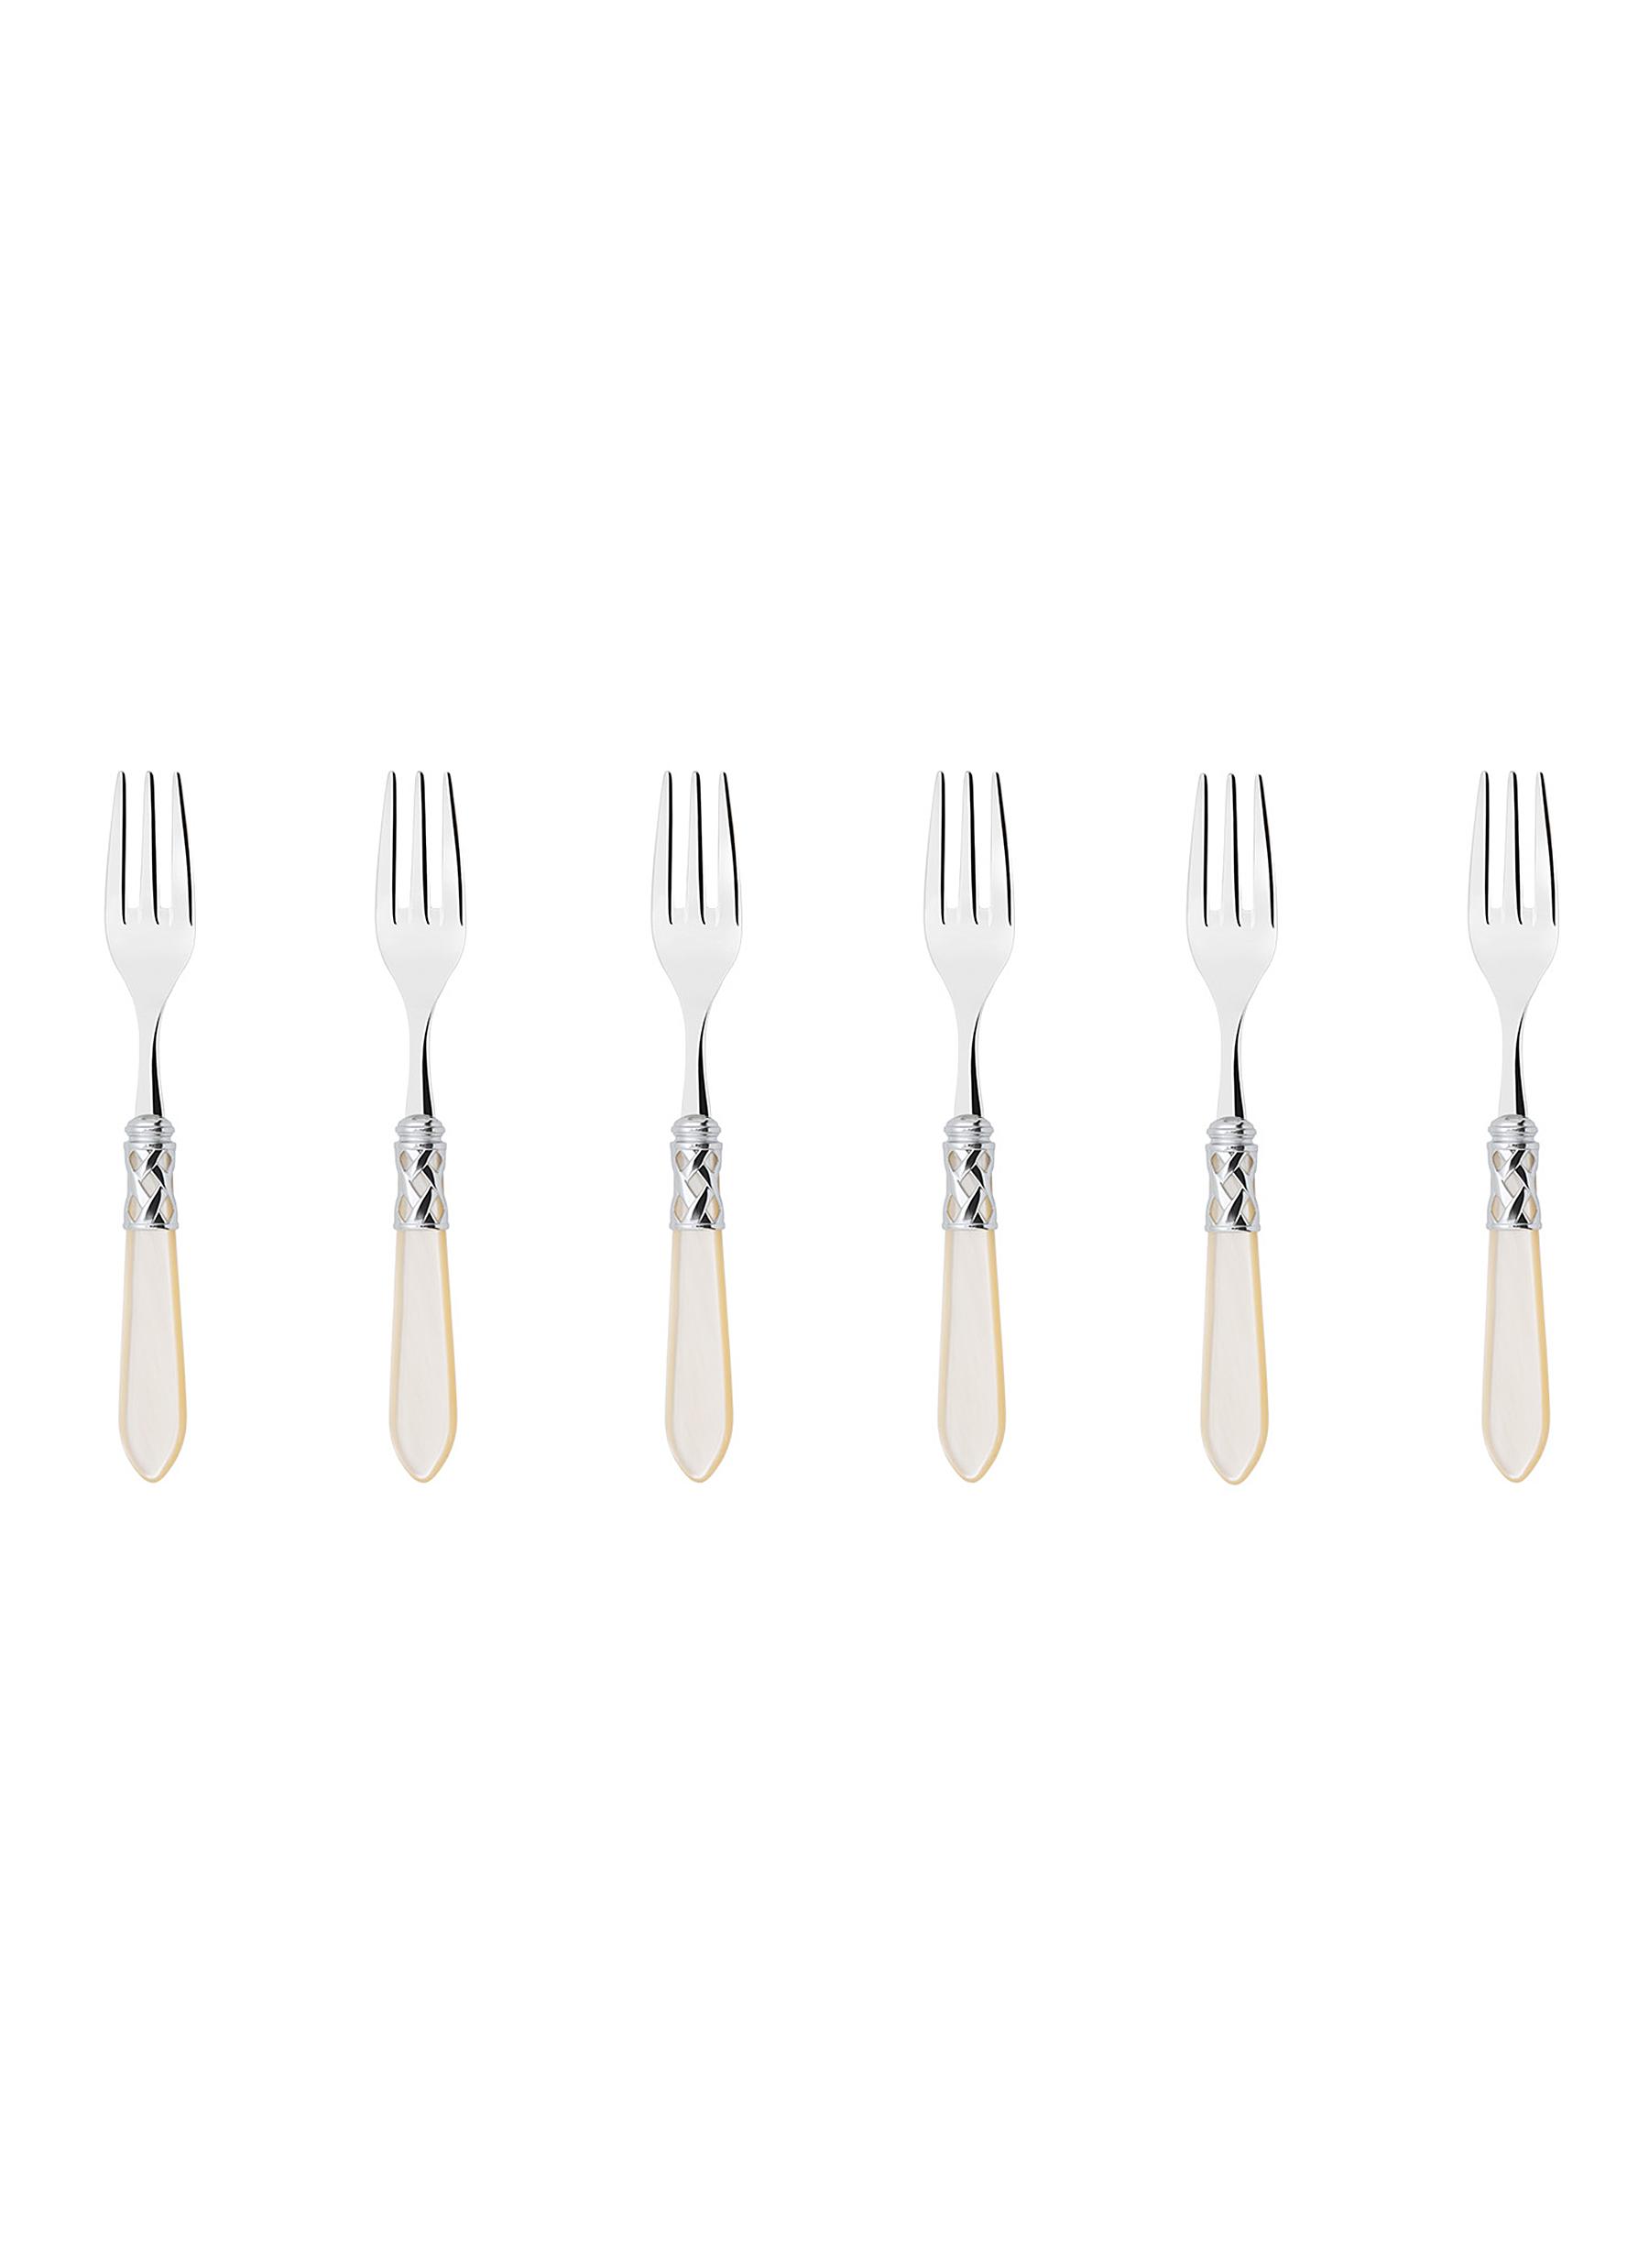 Aladdin’ Ivory Stainless Steel Dessert Forks - Set Of 6